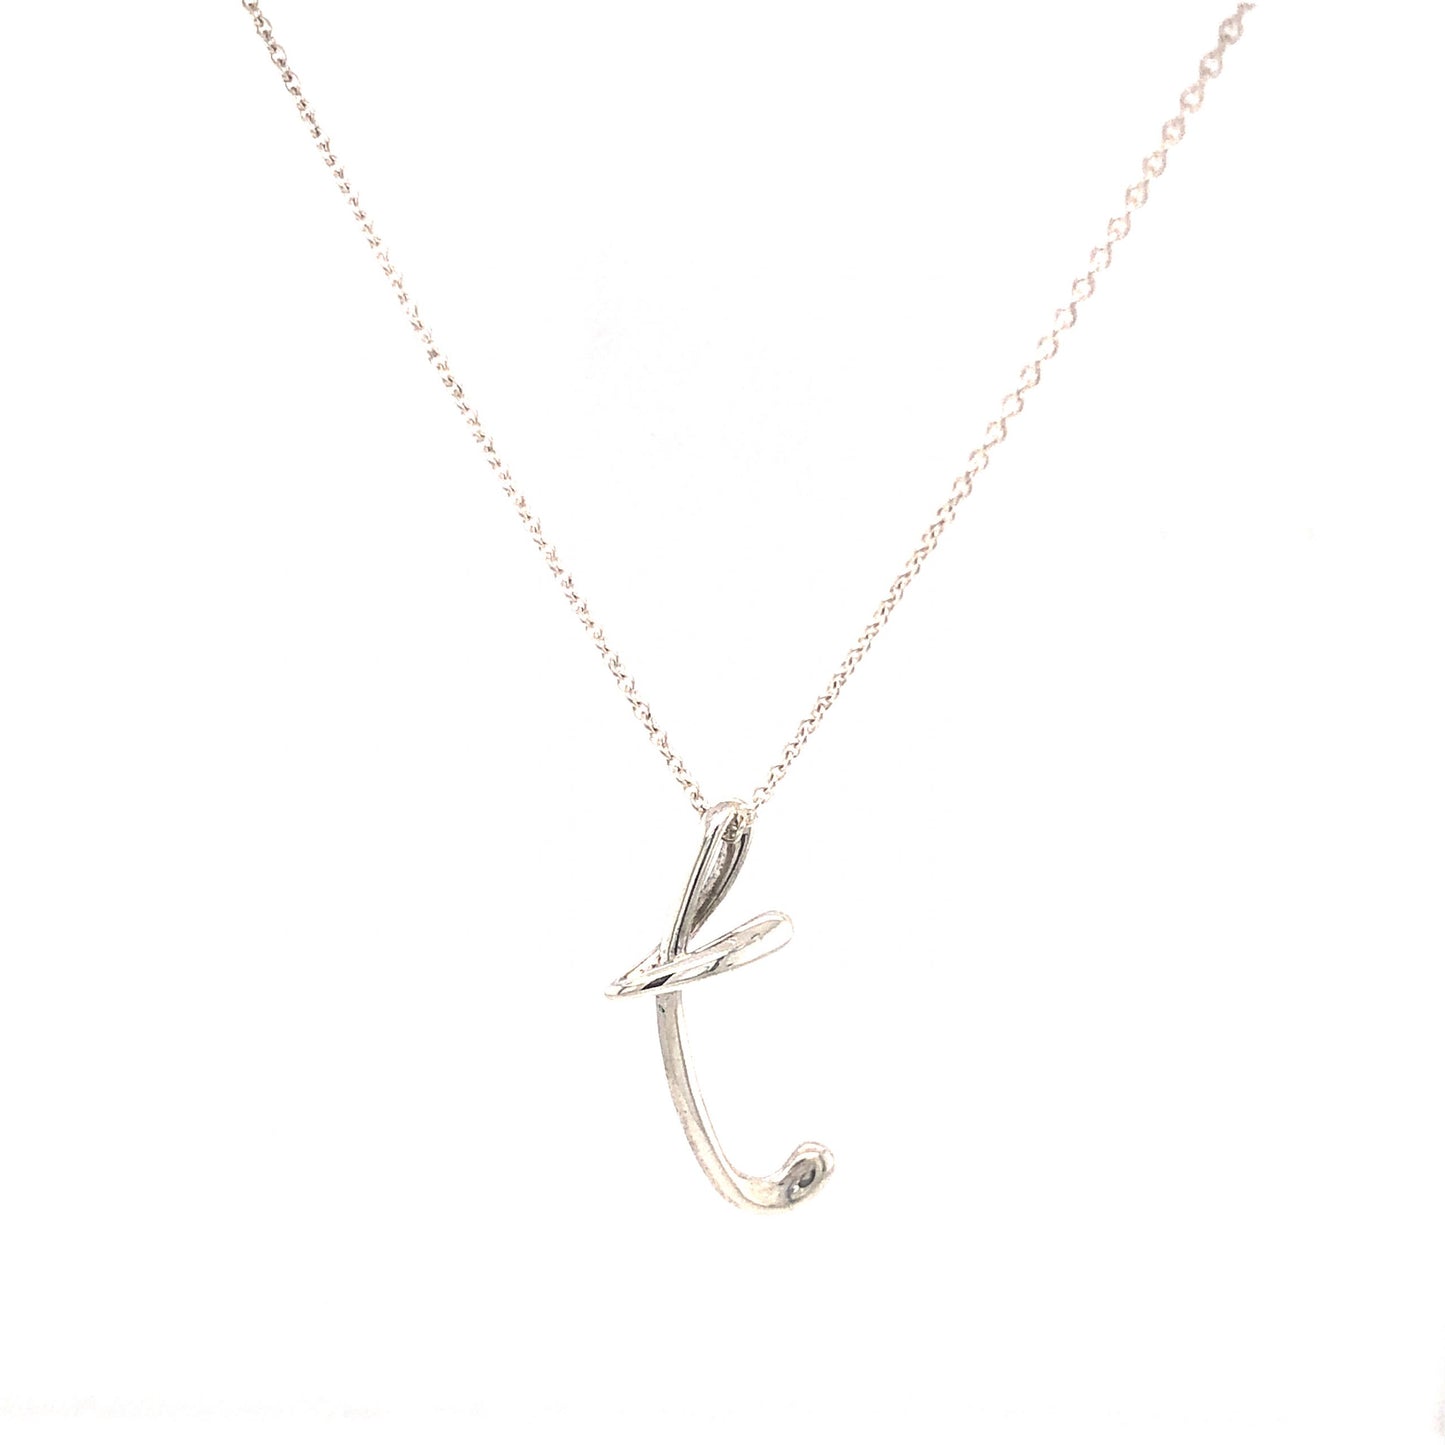 Tiffany & Co. Elsa Peretti "T" Necklace in Sterling Silver